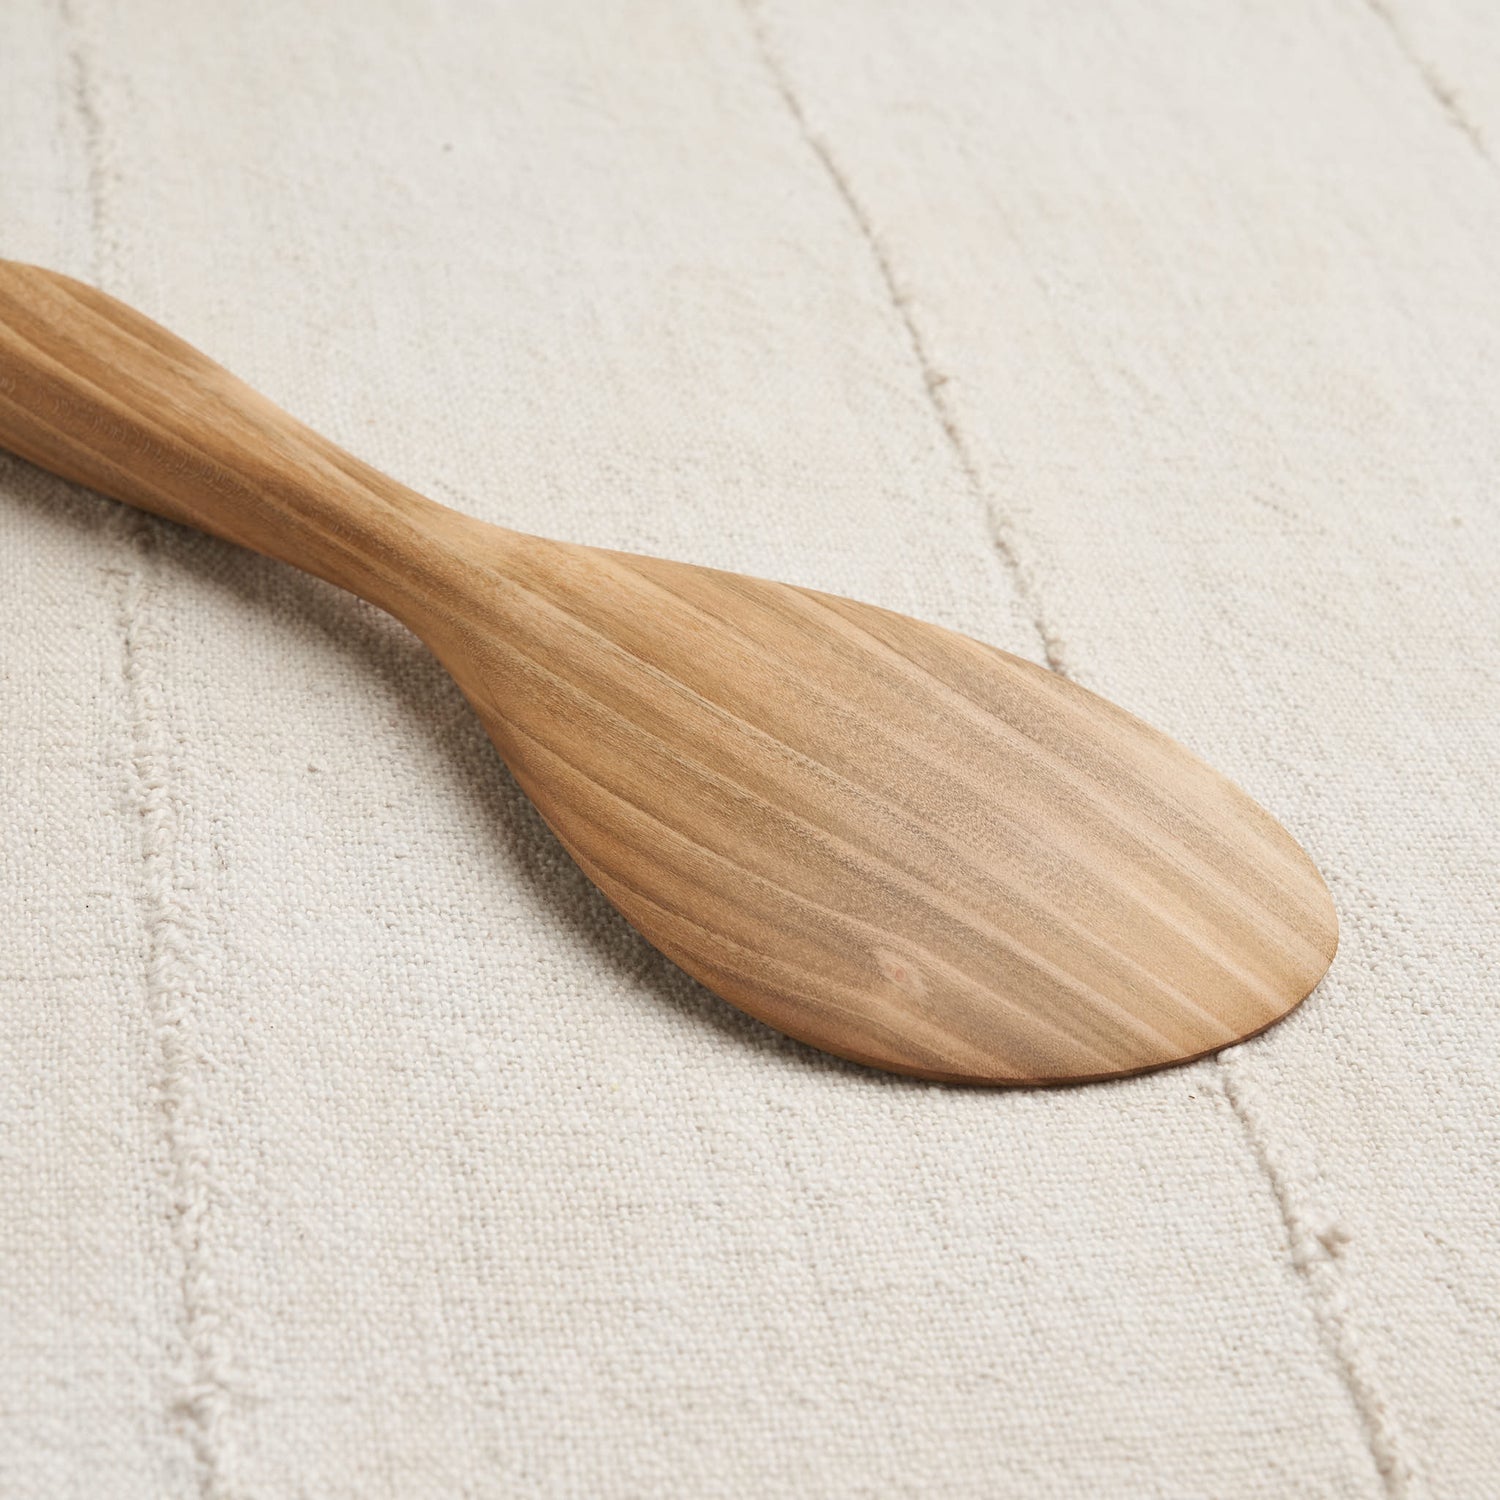 Natural Miyajima Birchwood Rice Paddle